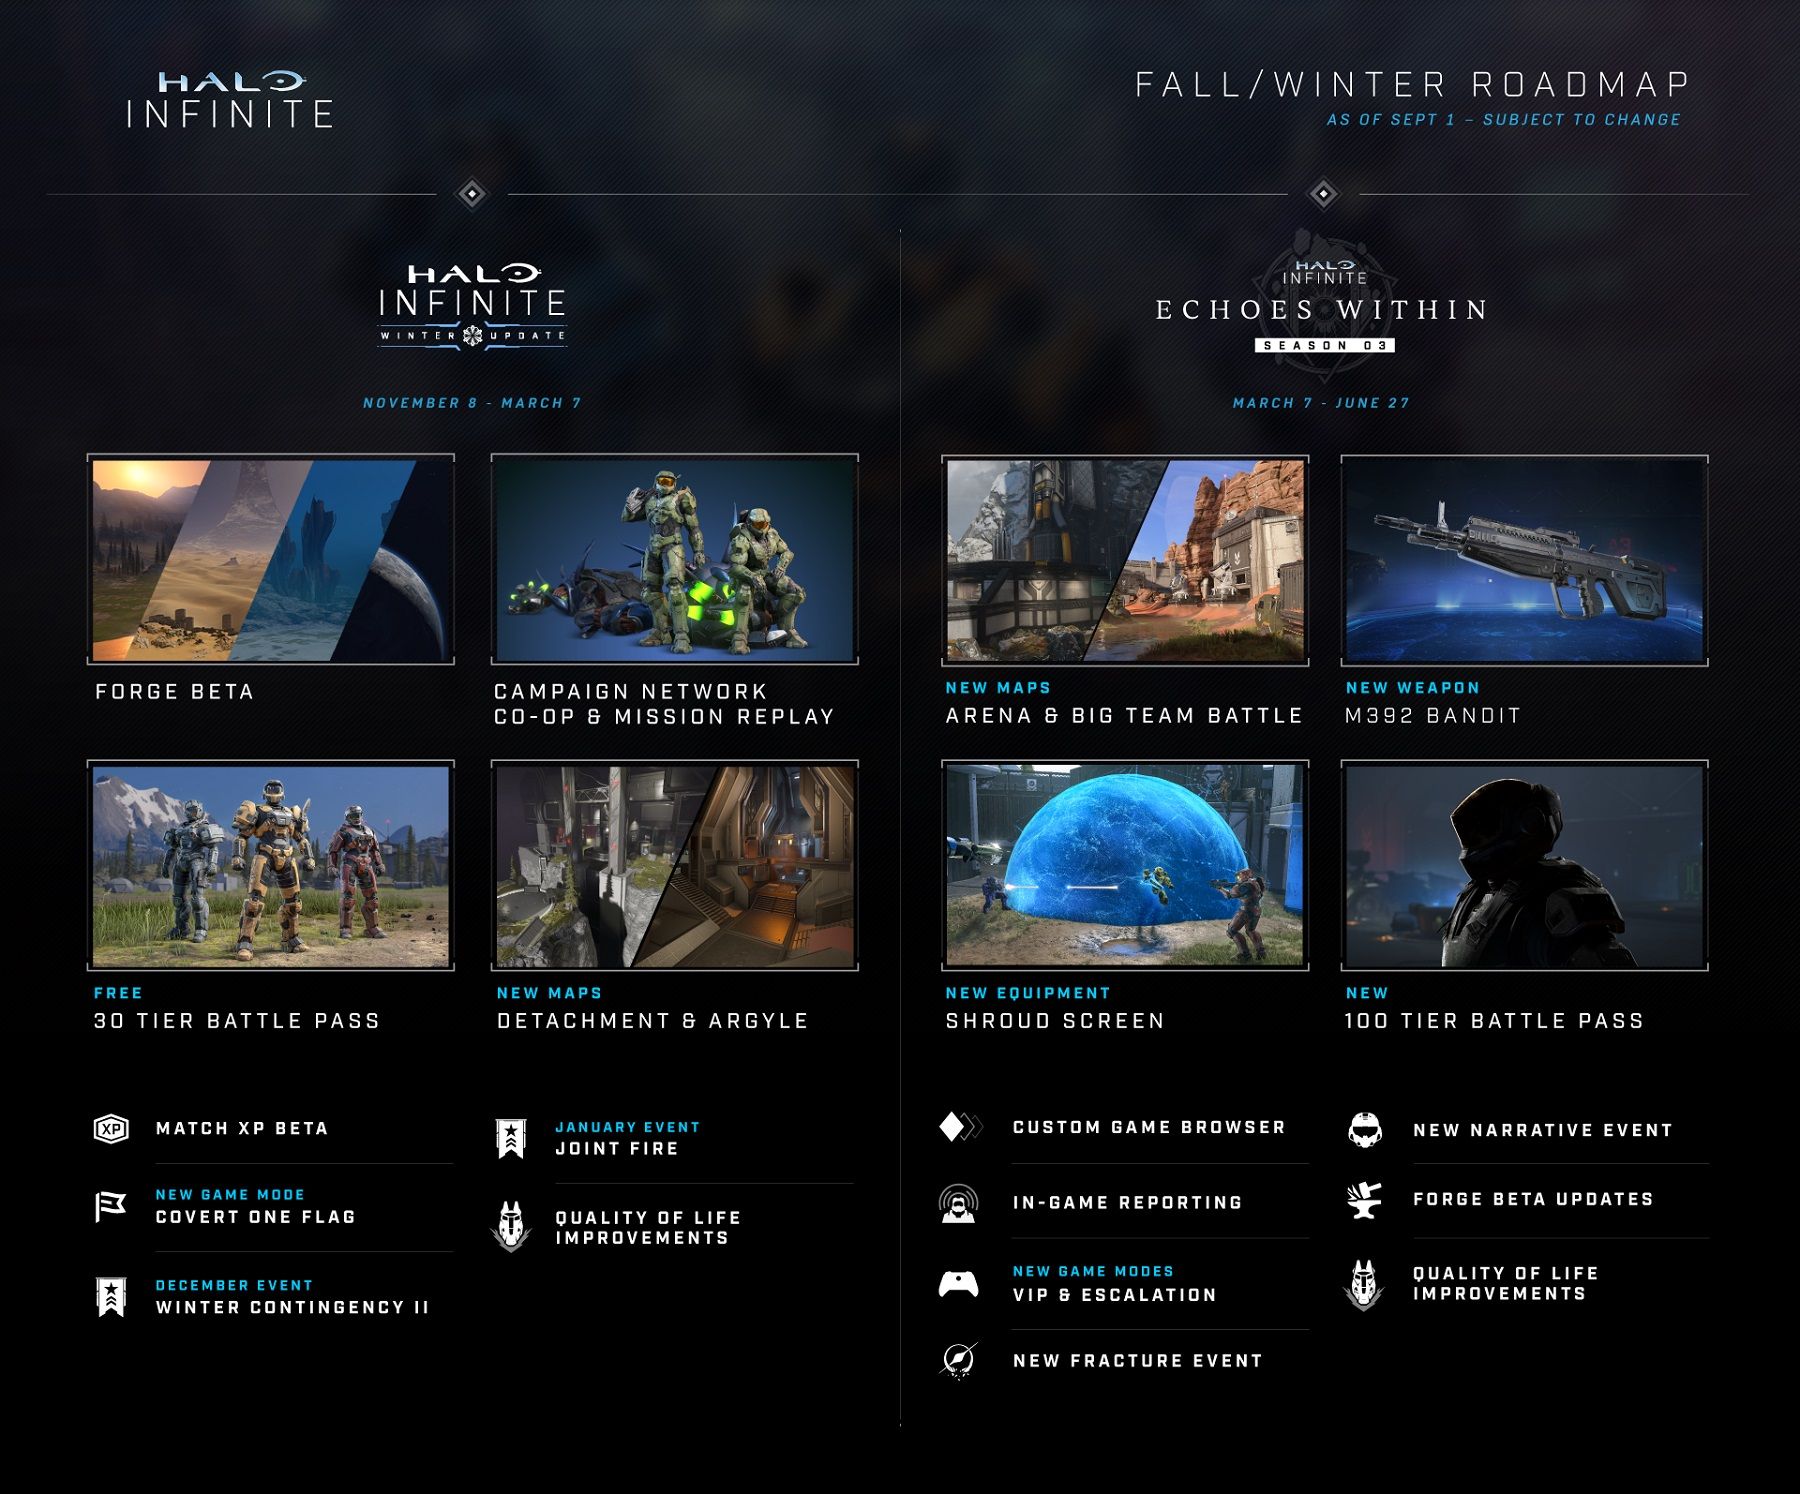 Halo Infinite Reveals Roadmap for Winter Update and Season 3